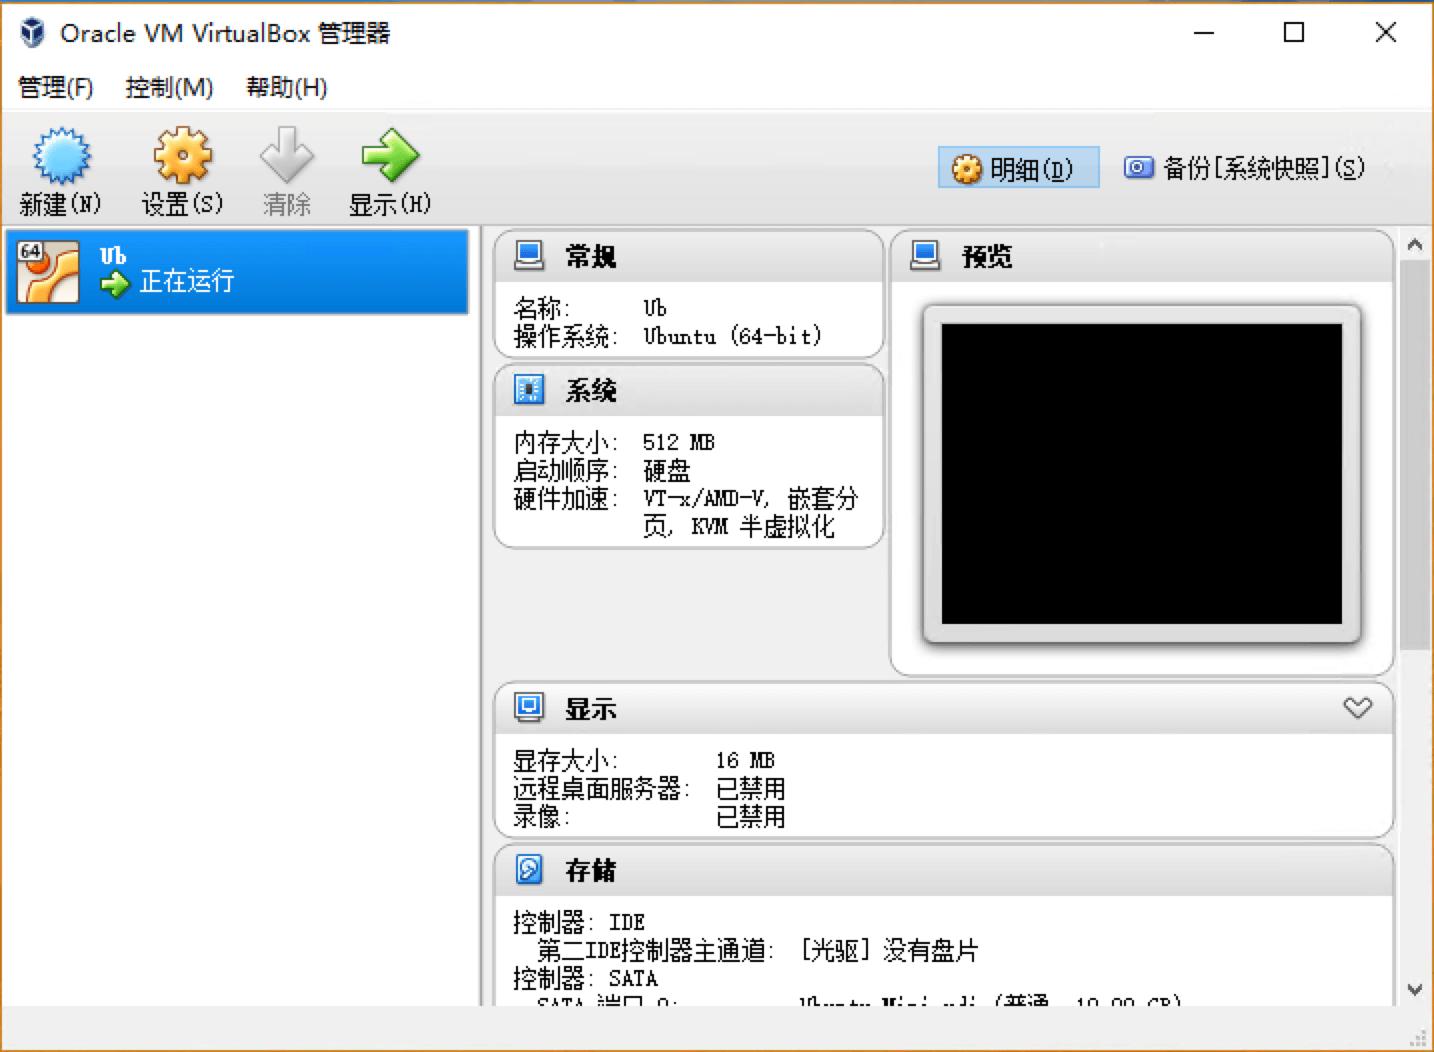 GreenVBox - 包含完整功能的便携版 VirtualBox 虚拟机 [Windows] 2